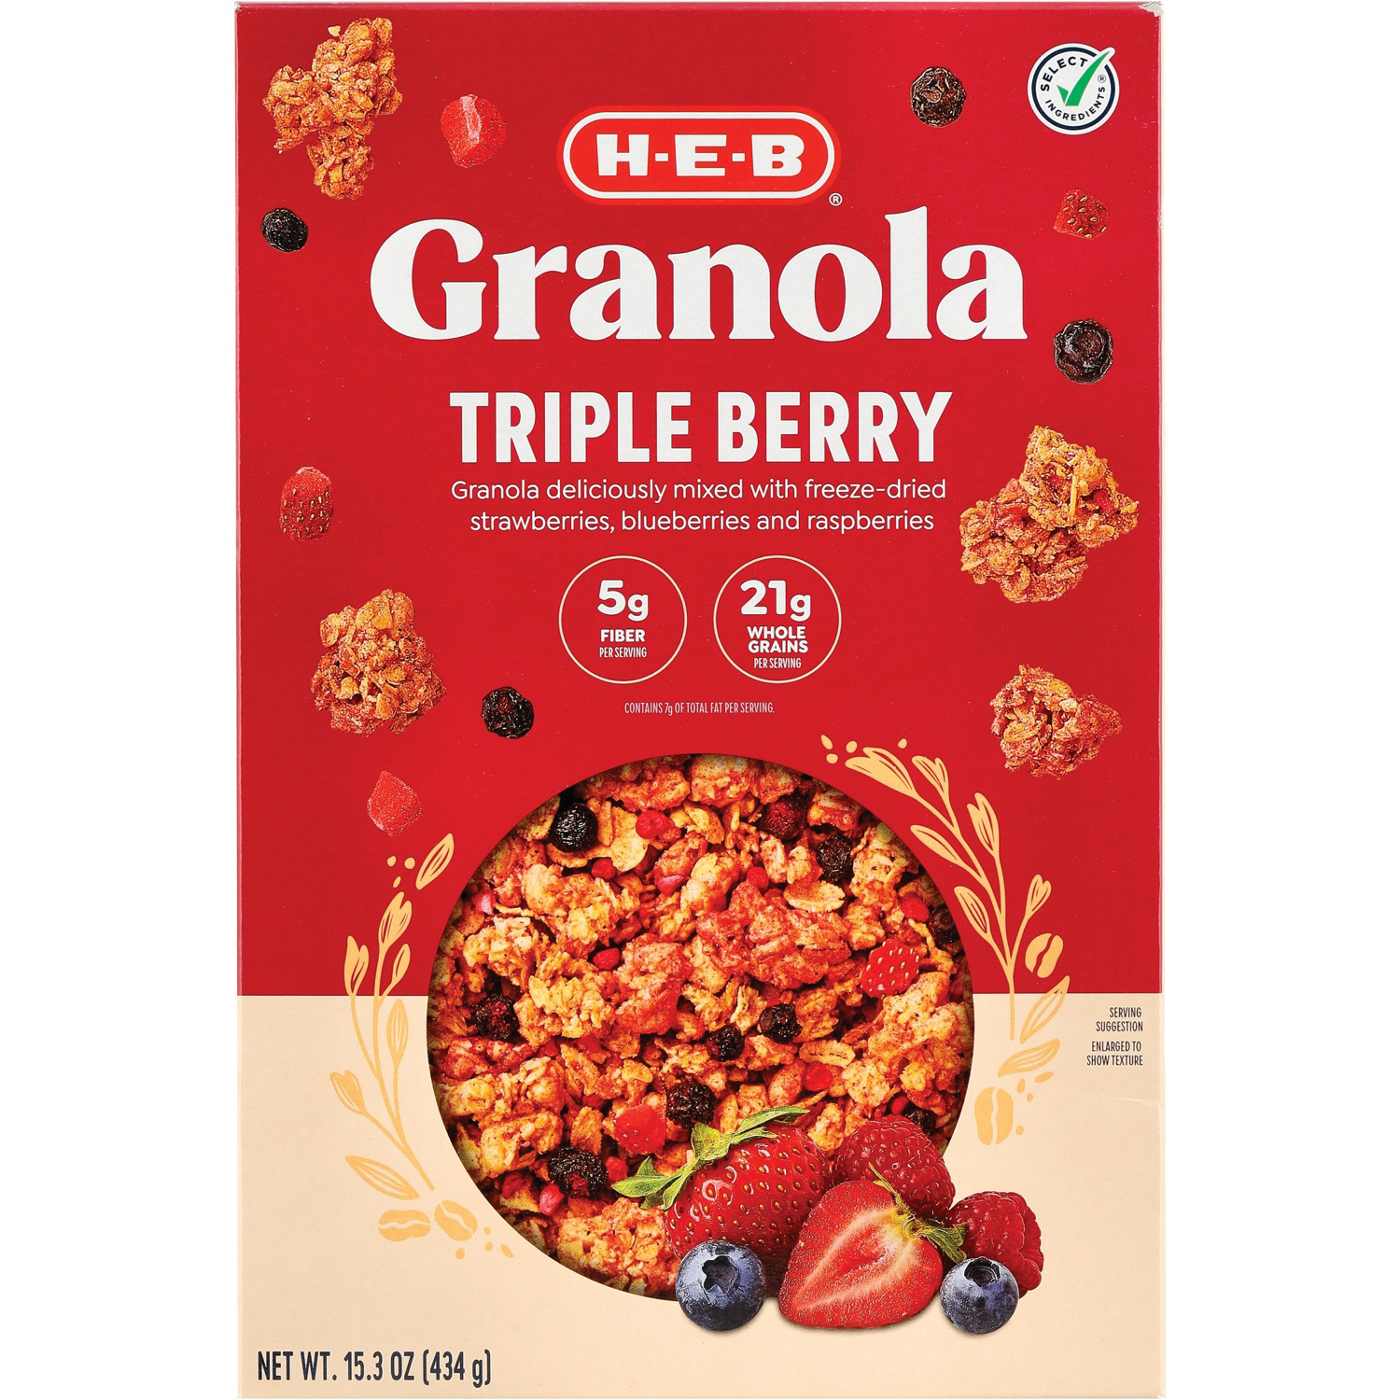 H-E-B Triple Berry Granola; image 1 of 2